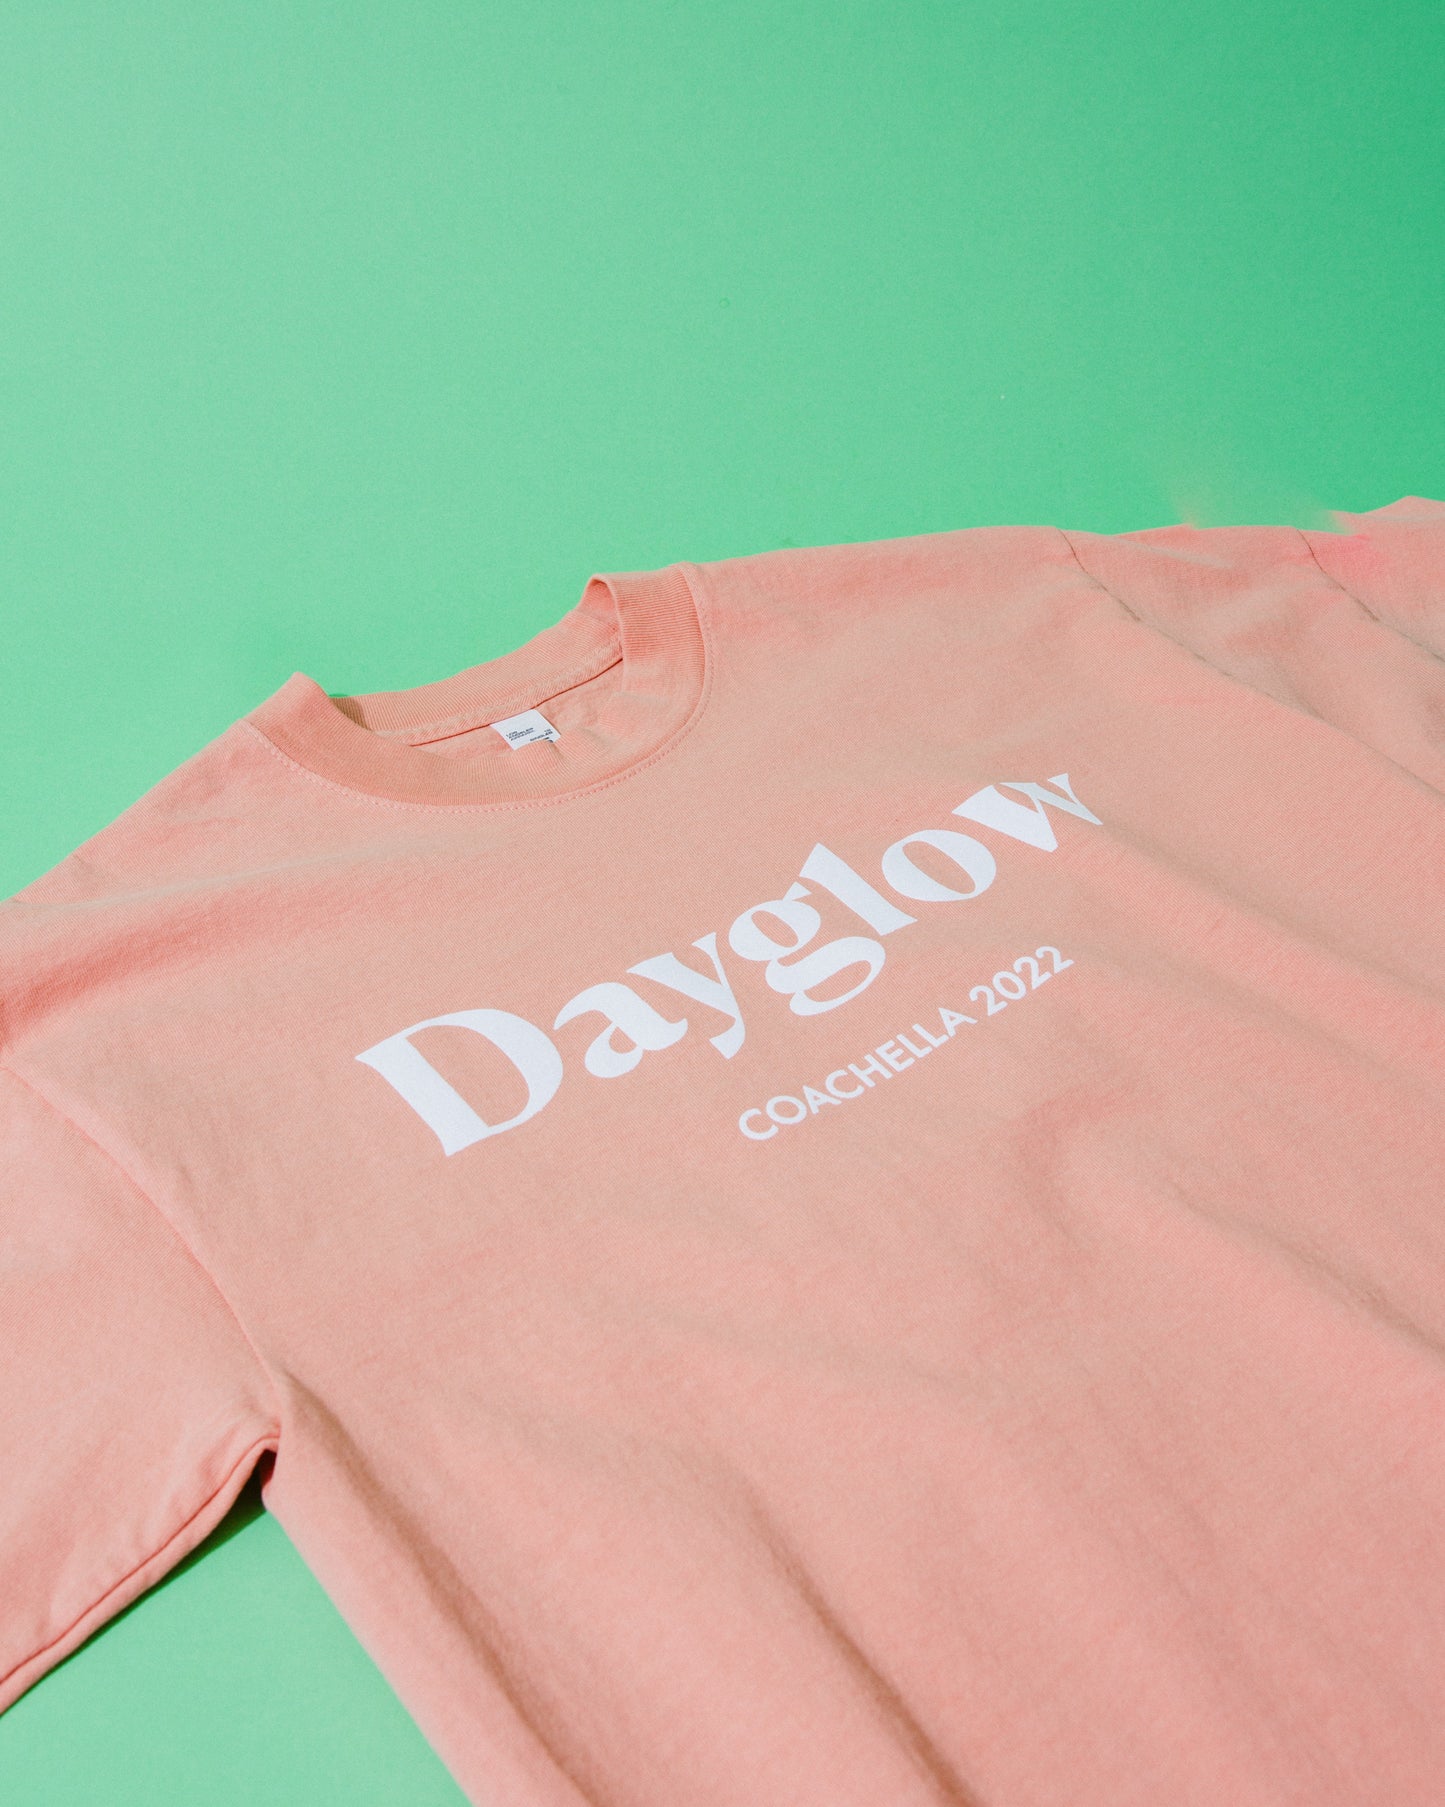 Dayglow - Coachella Shirt